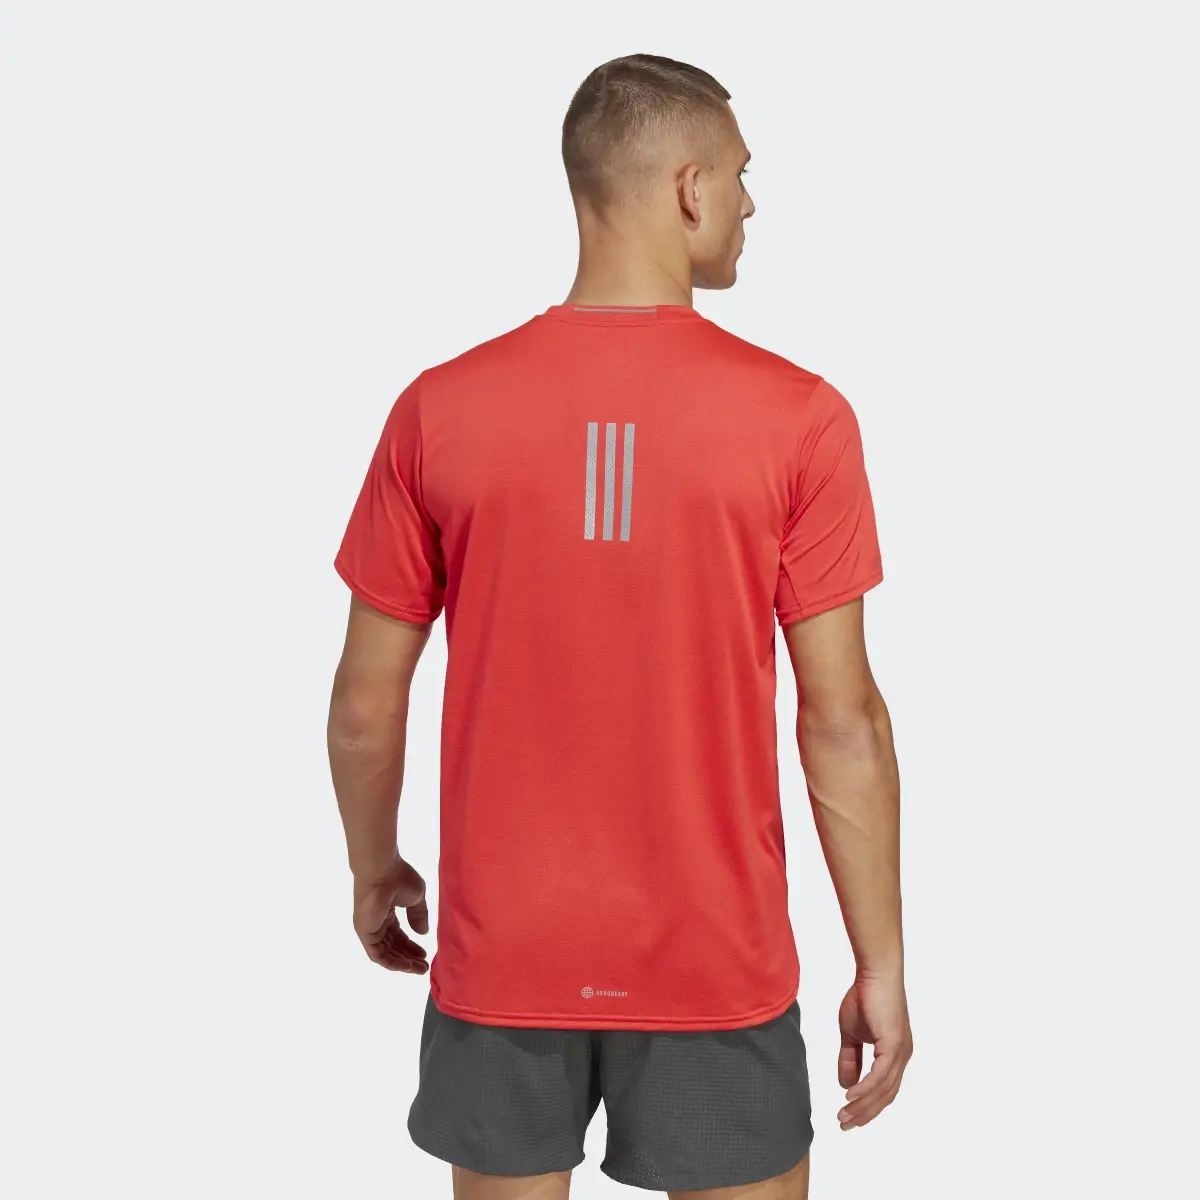 Adidas T-shirt Designed 4 Running. 3